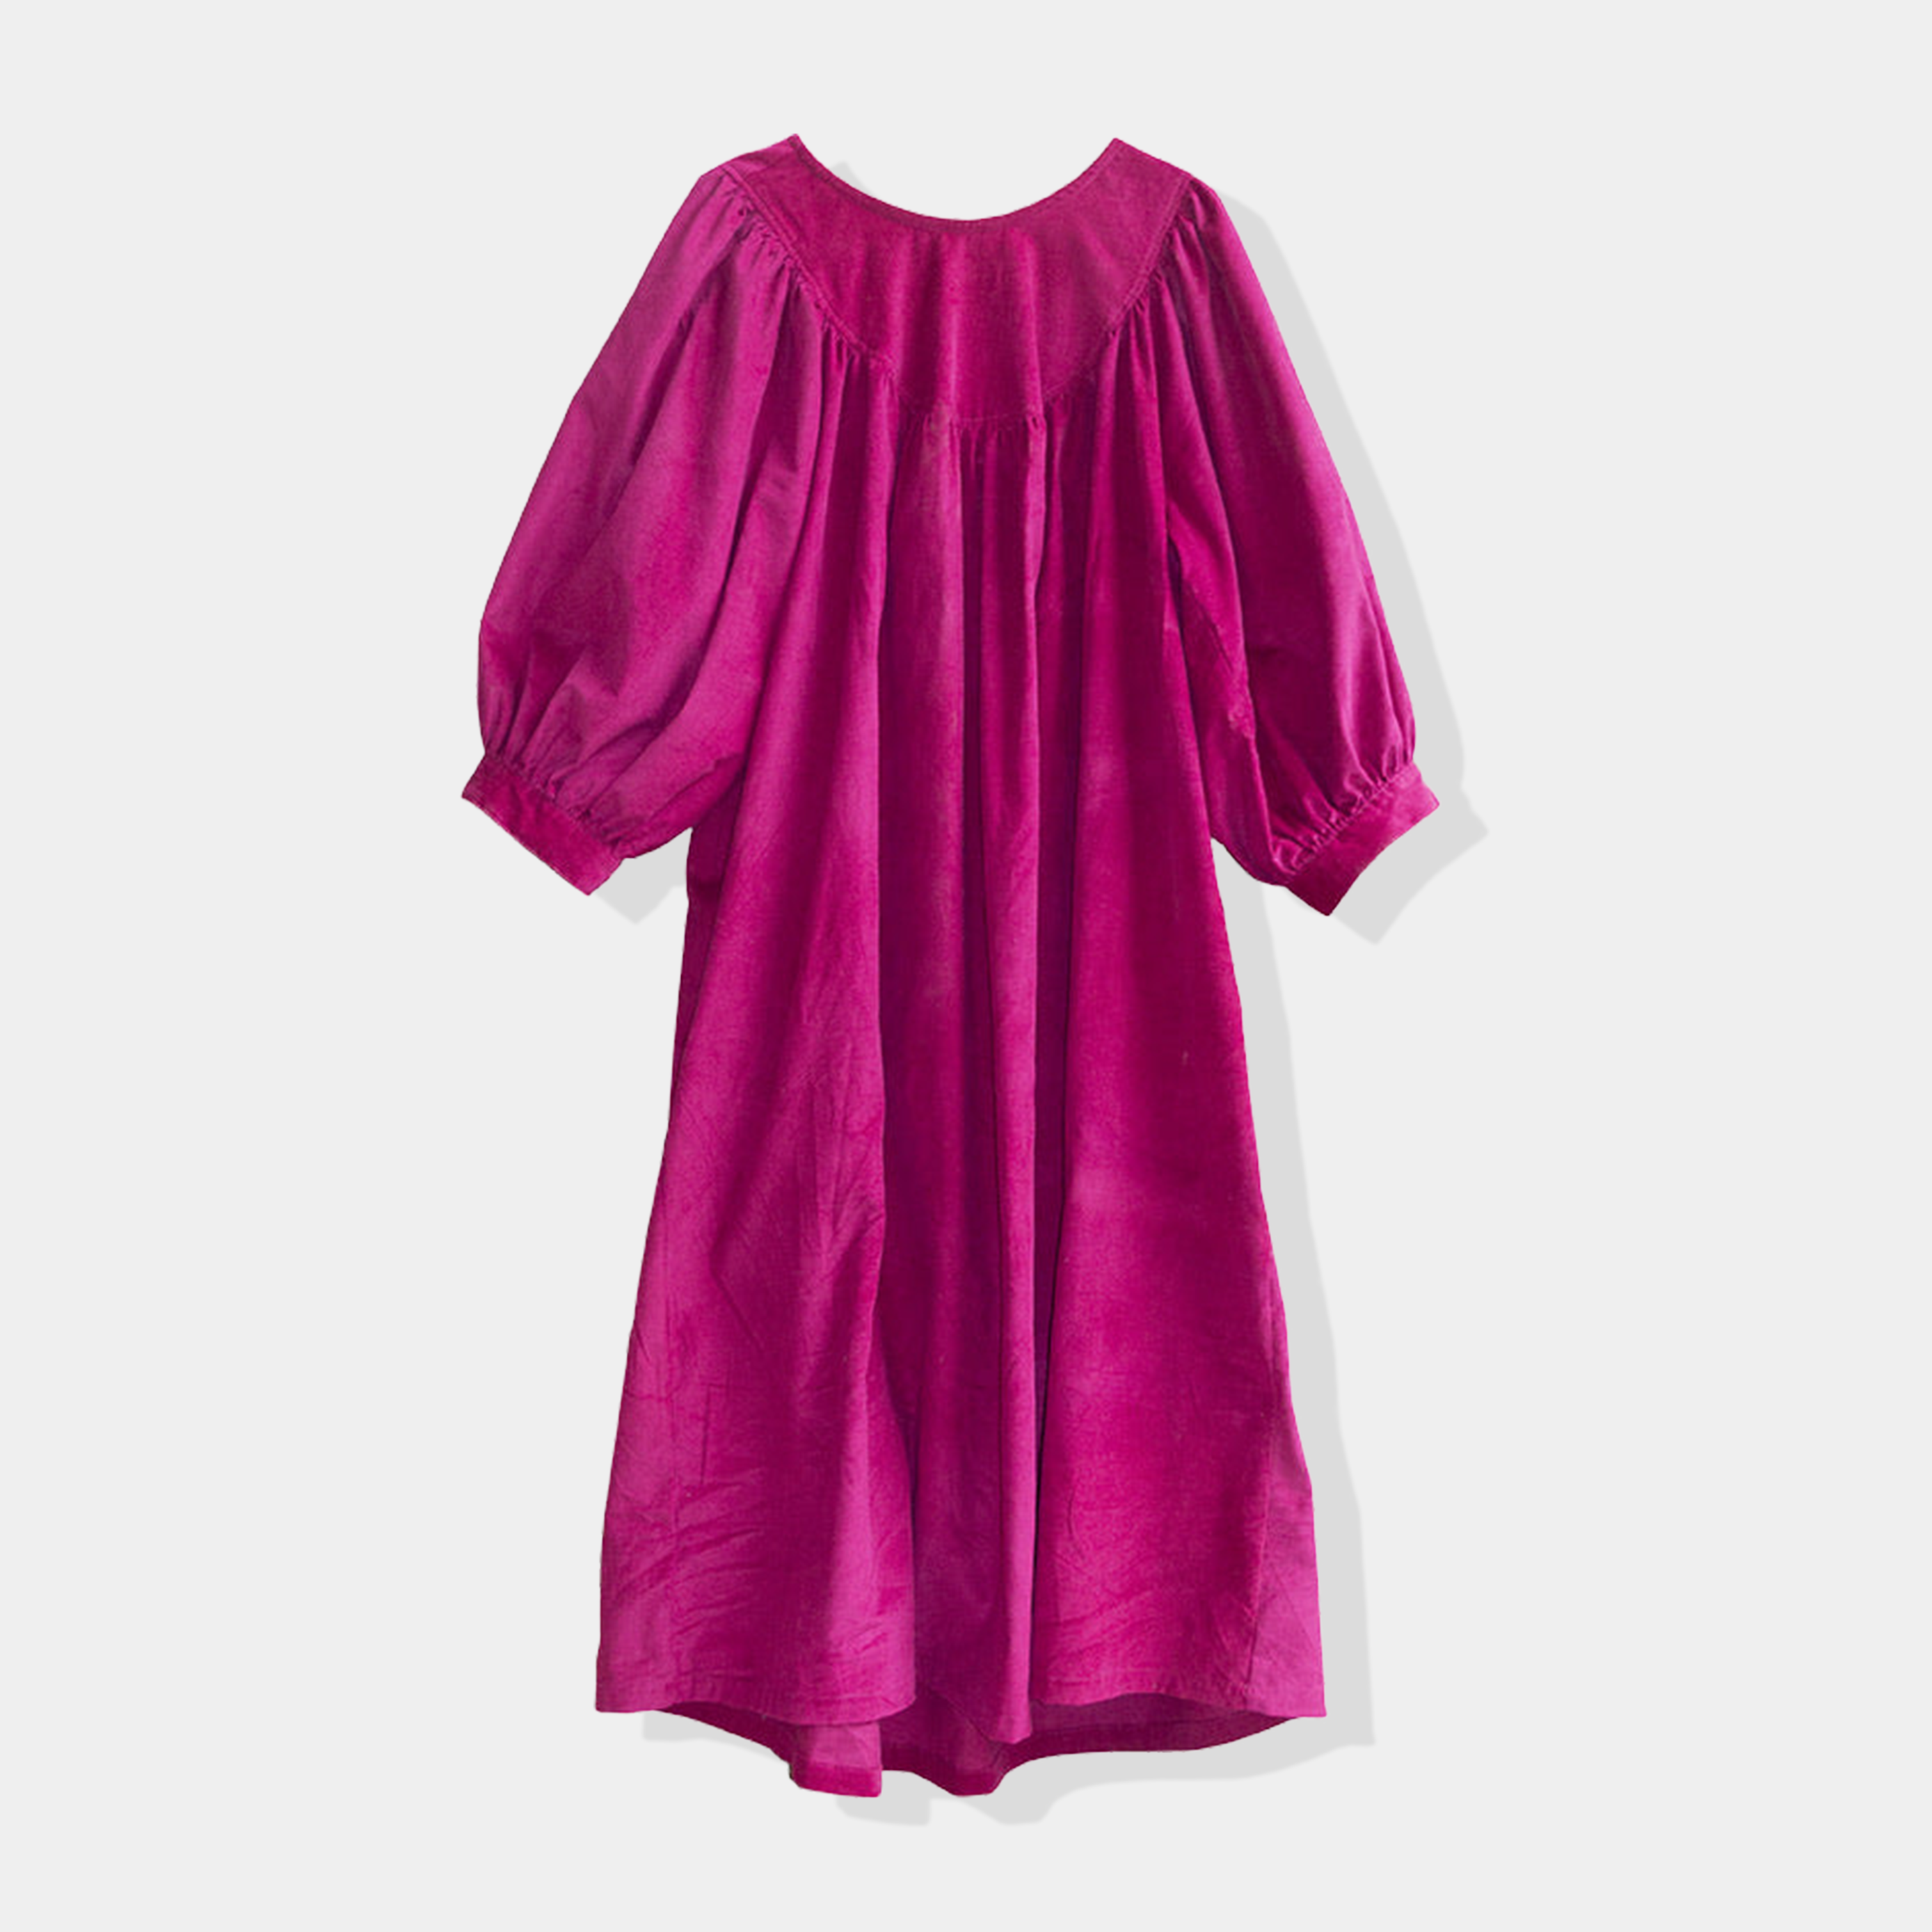 Brienne Dress in Raspberry Corduroy